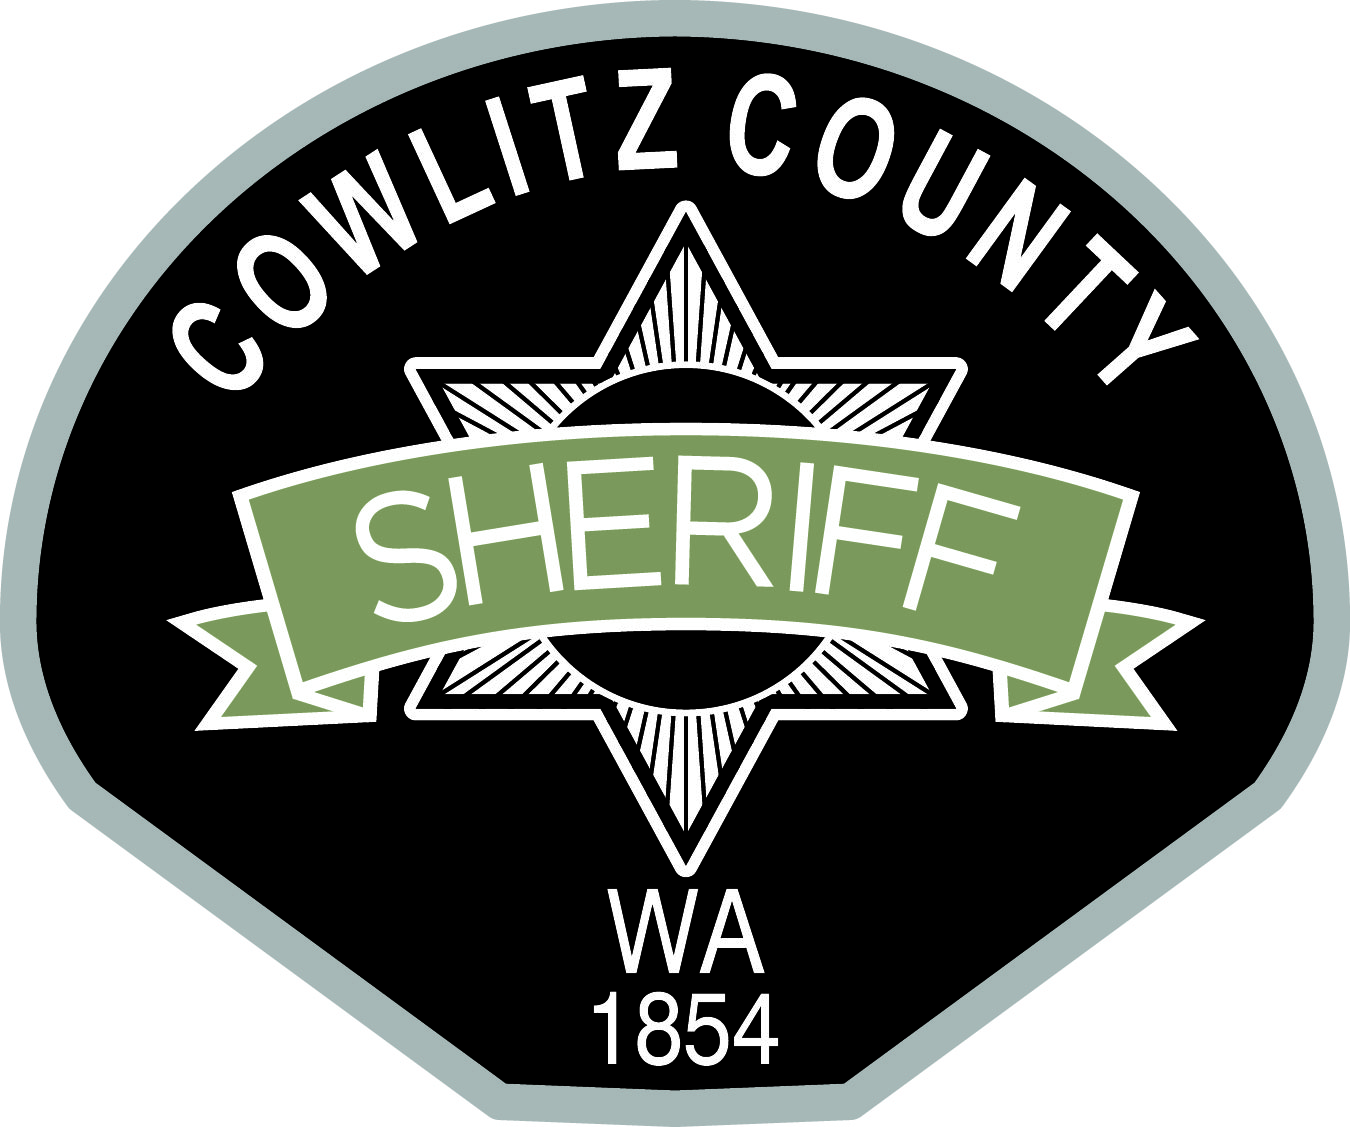 Cowlitz Co. Sheriff's Office news via